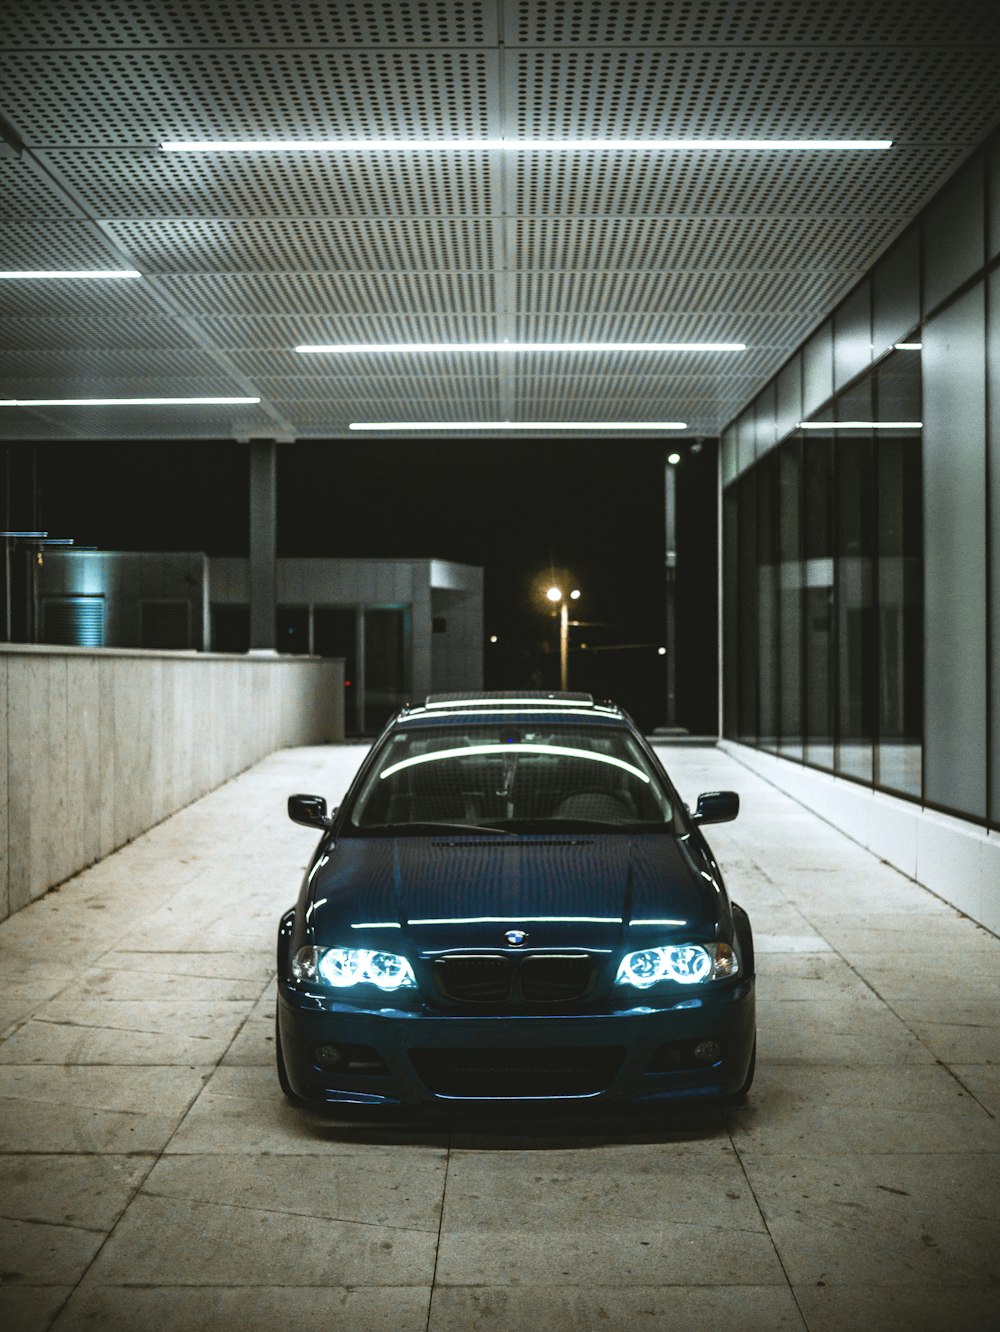 a blue car parked in a parking garage